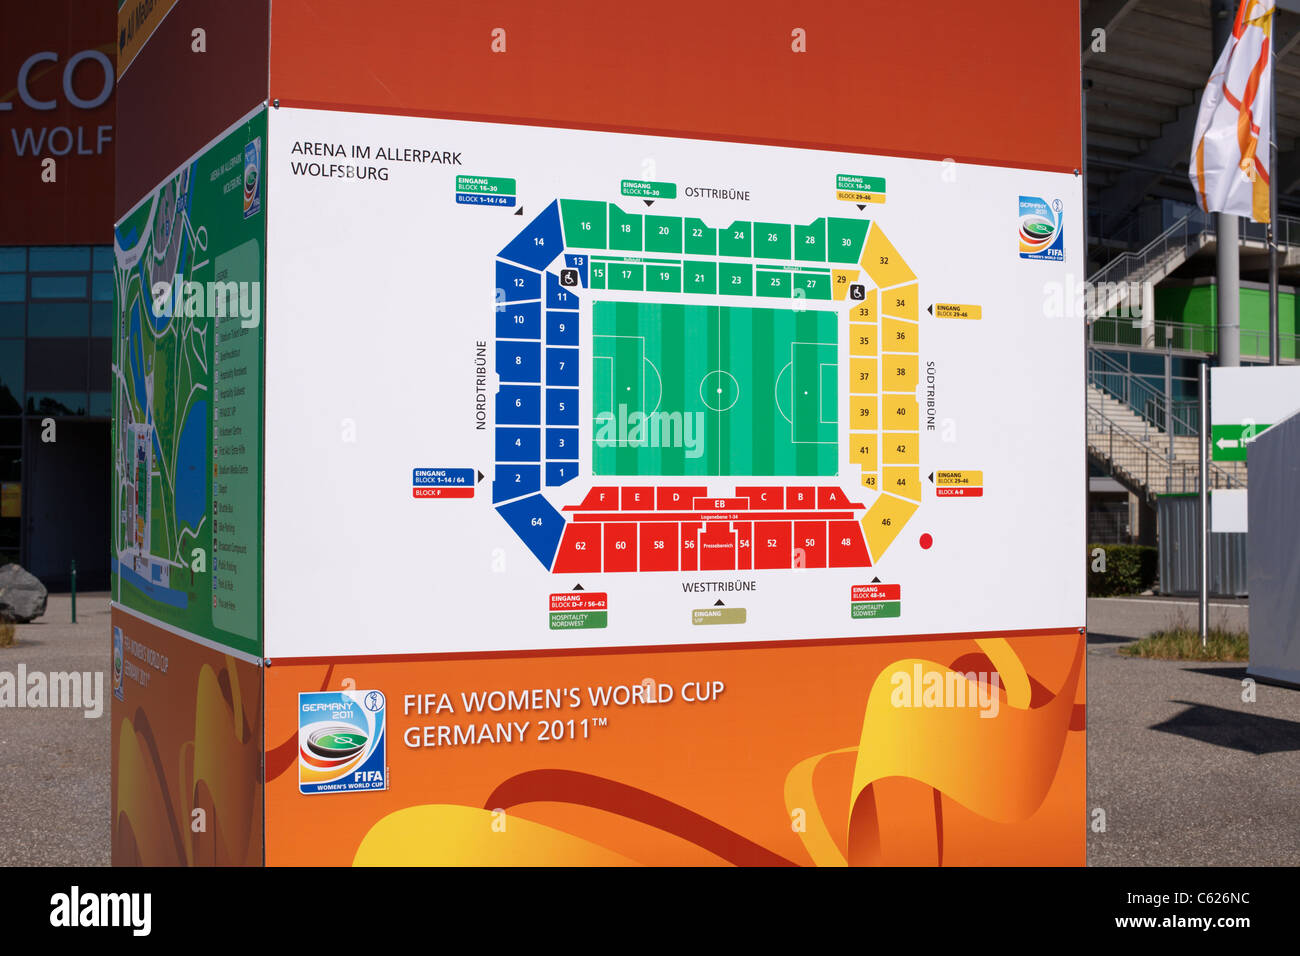 Tcf Stadium Seating Chart